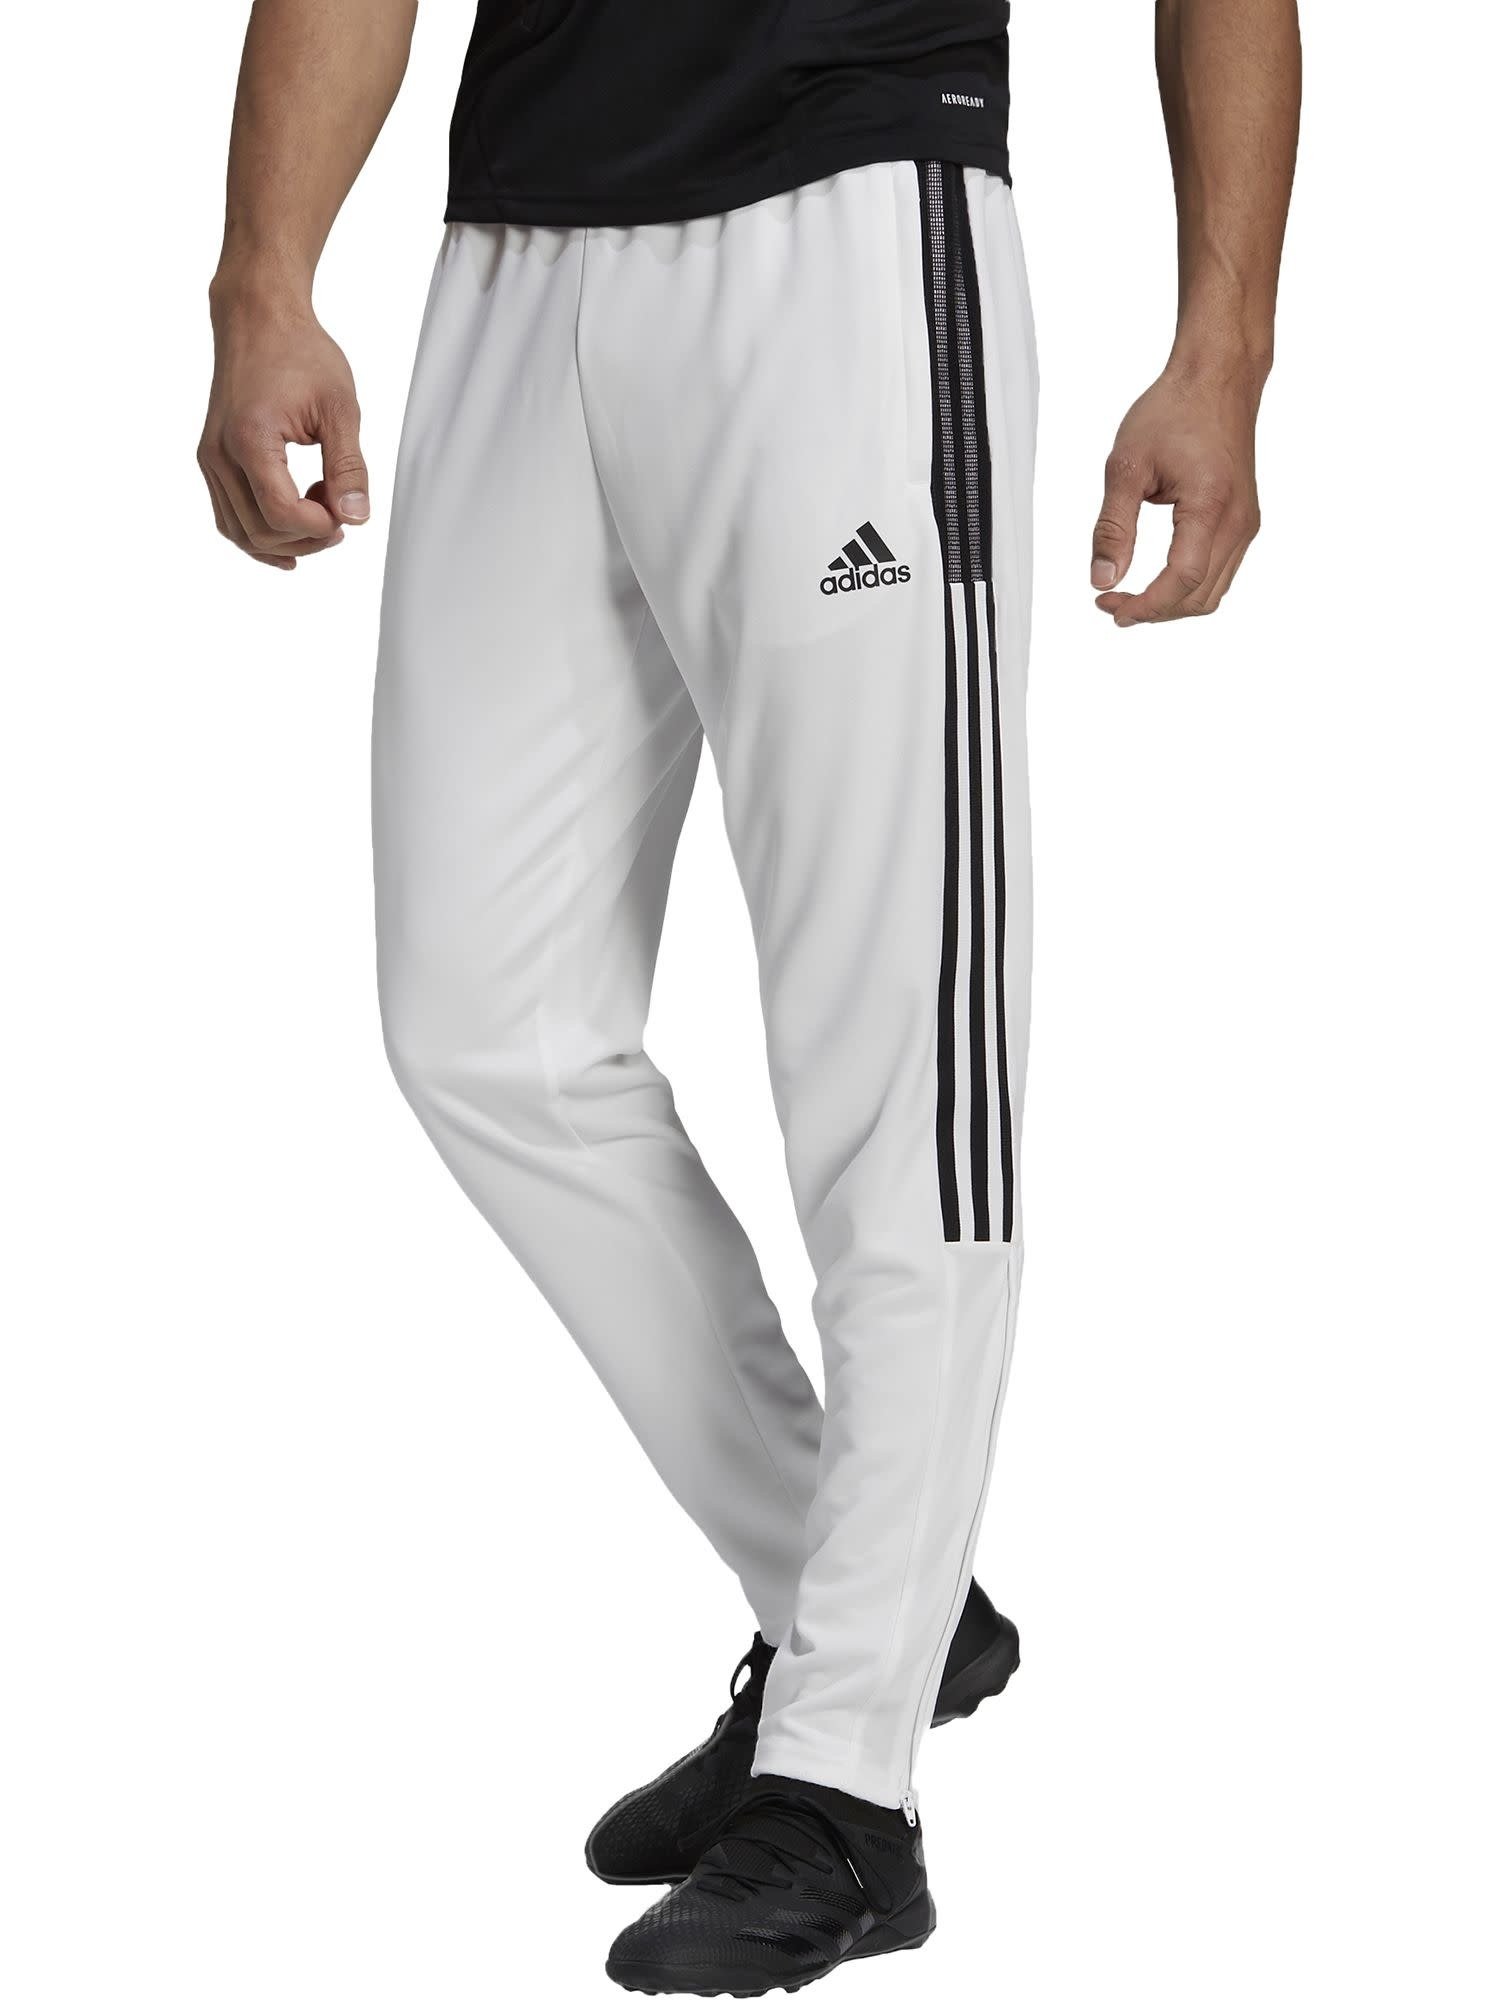 adidas Tiro 21 Track Pants White/Black - FW22 Men's - US